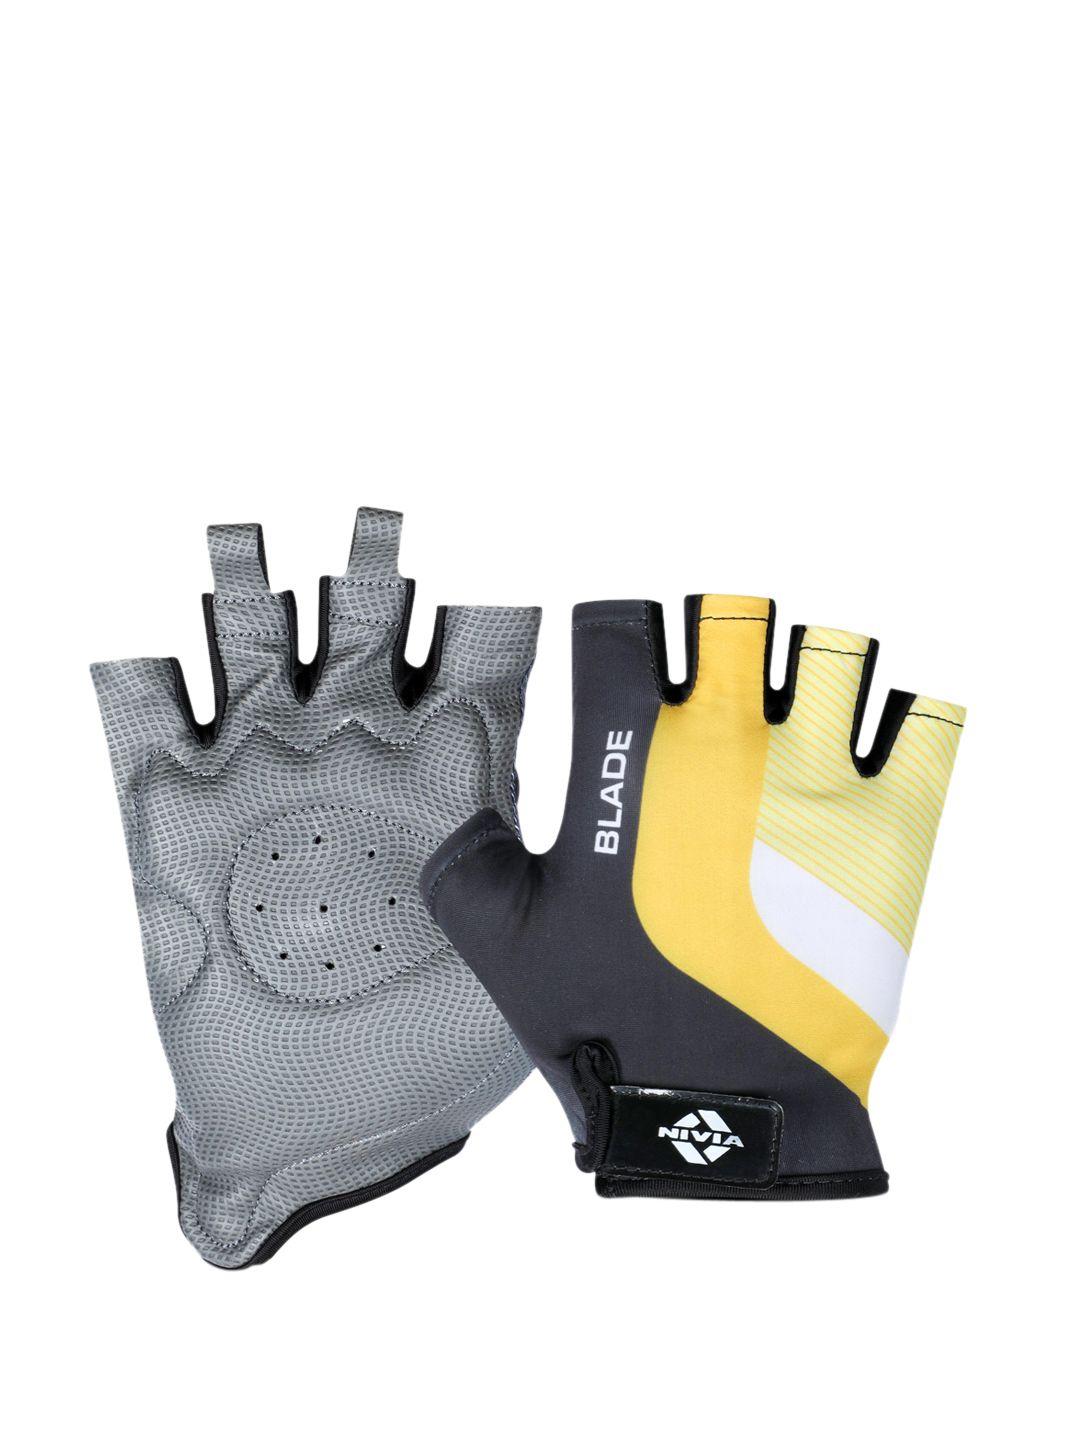 nivia unisex yellow printed fitness gloves